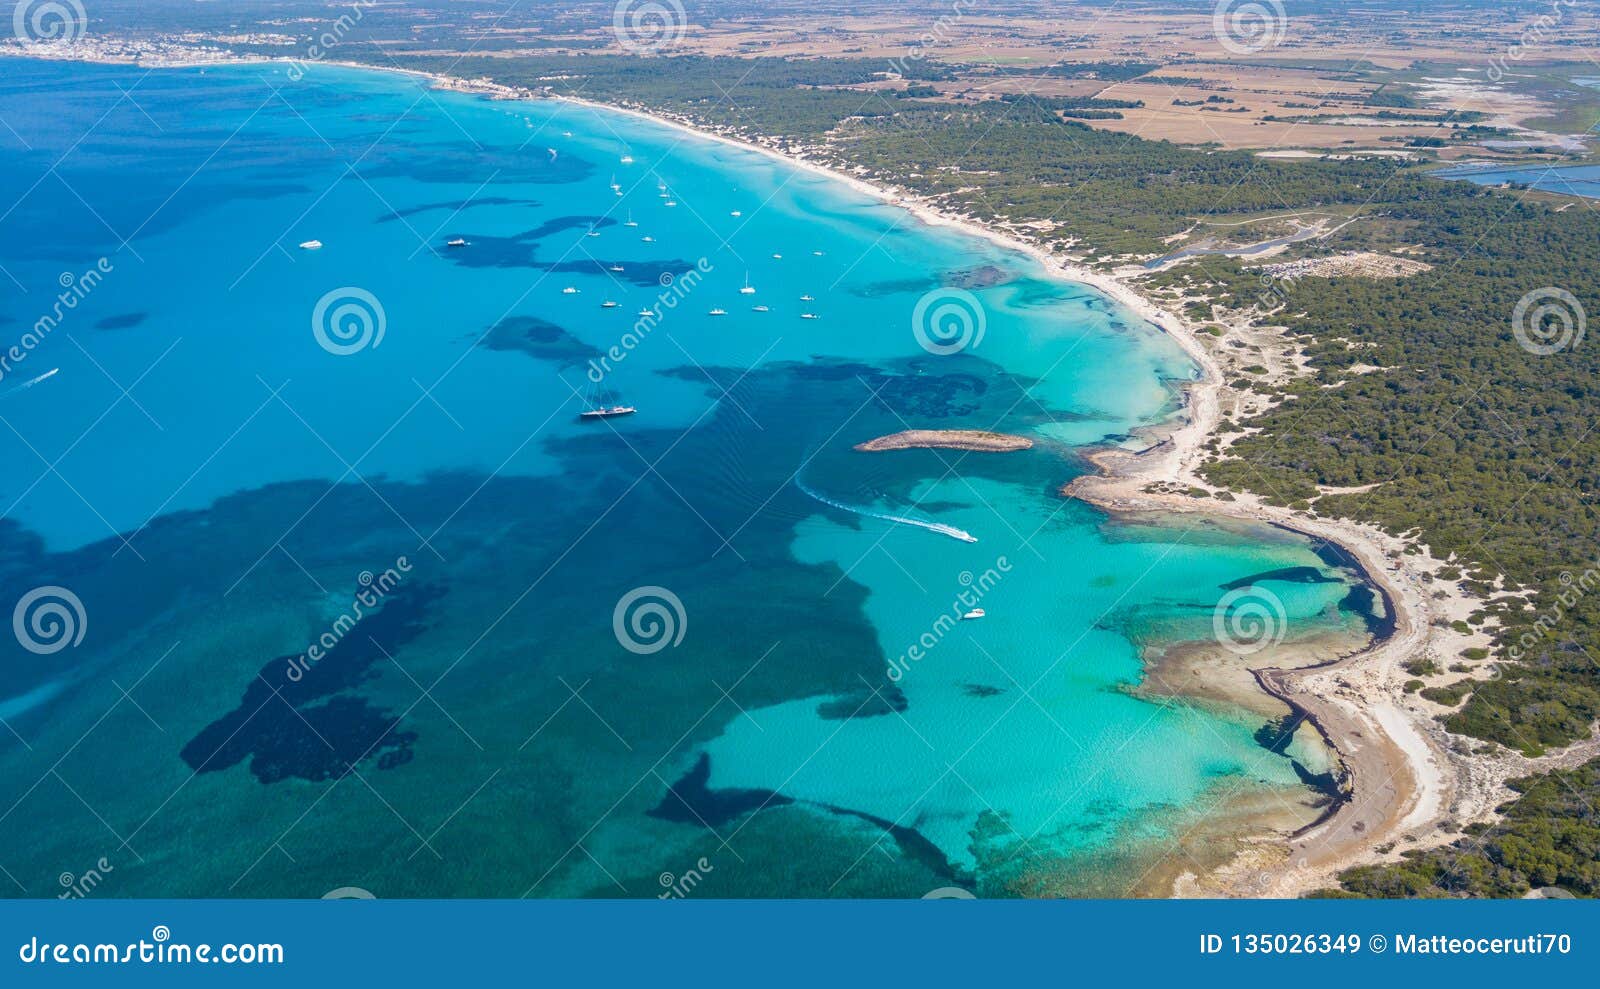 sa rapita, mallorca spain. amazing drone aerial landscape of the charming es rapita and es trenc beaches and turquoise sea